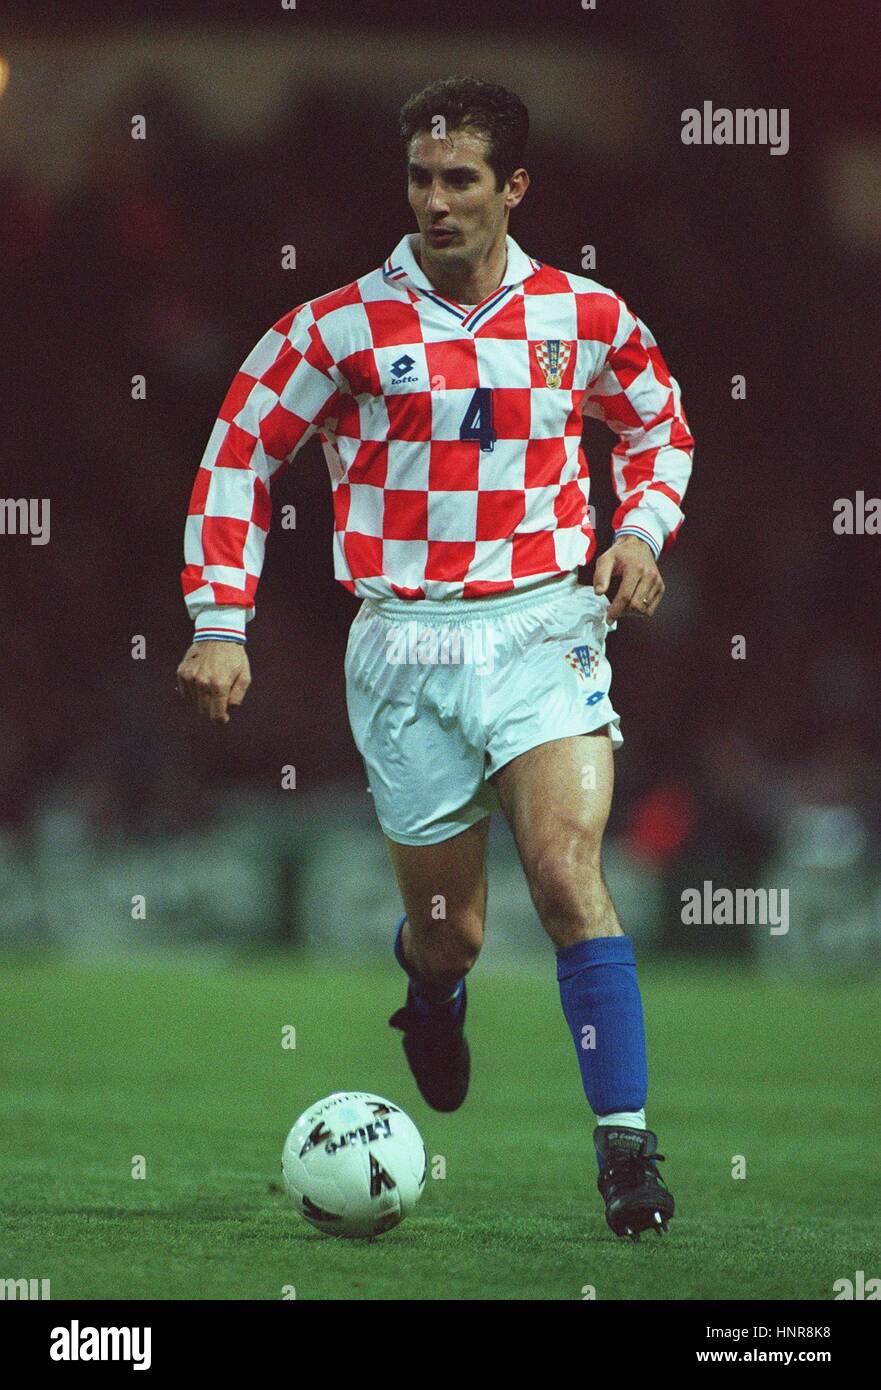 Igor Stimac's iconic Croatia kit